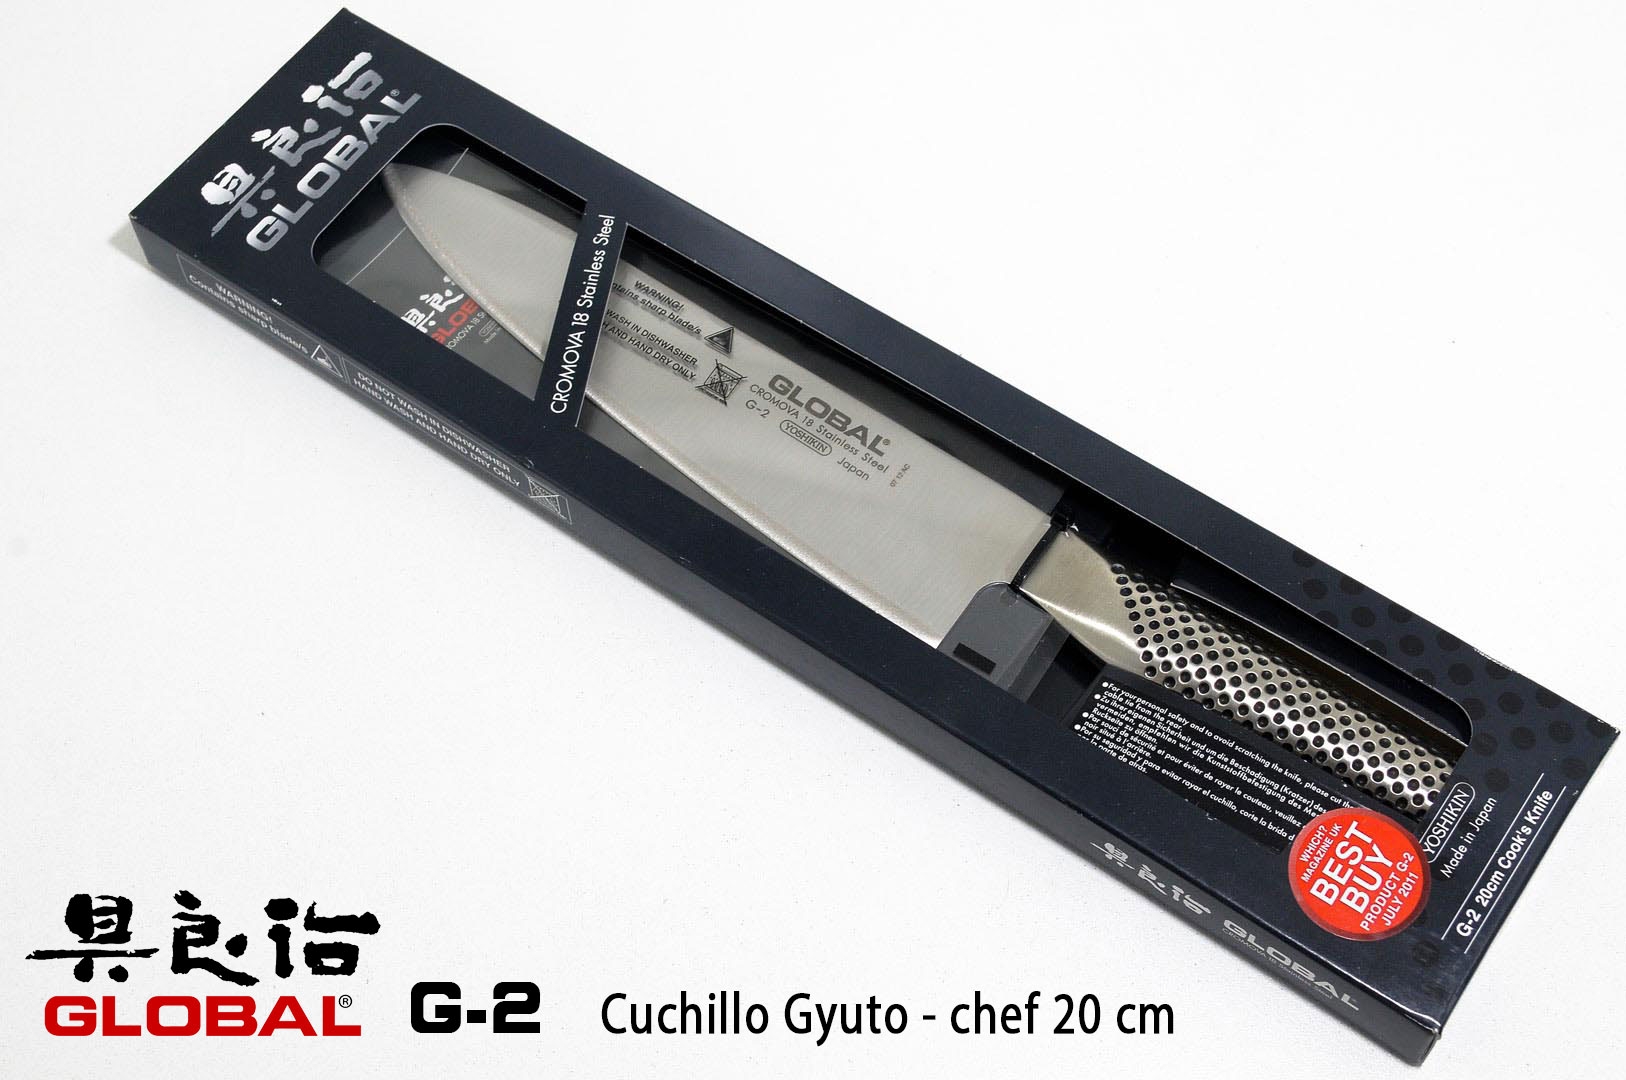 G-2-Cuchillo Gyuto 20cm de chef  Global G-2-max-8.